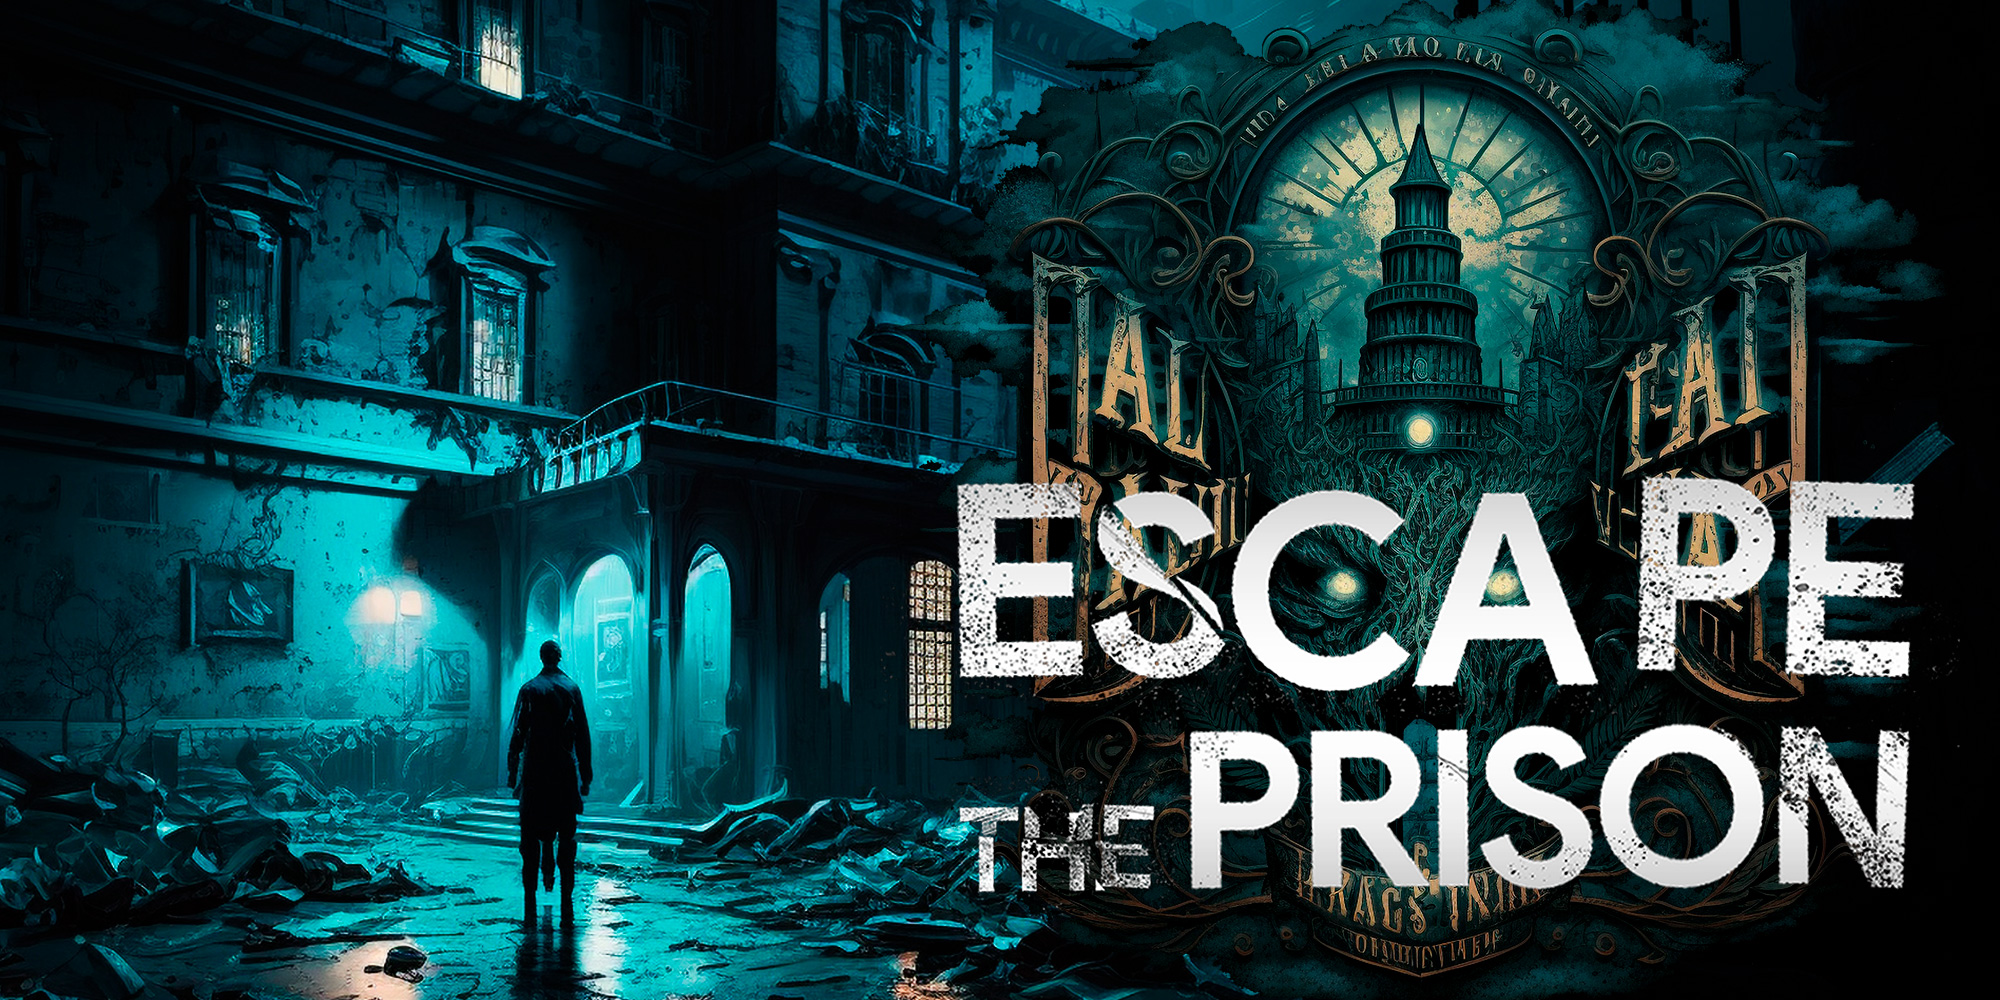 Escape the Prison: 3 Days to Freedom/Nintendo Switch/eShop Download